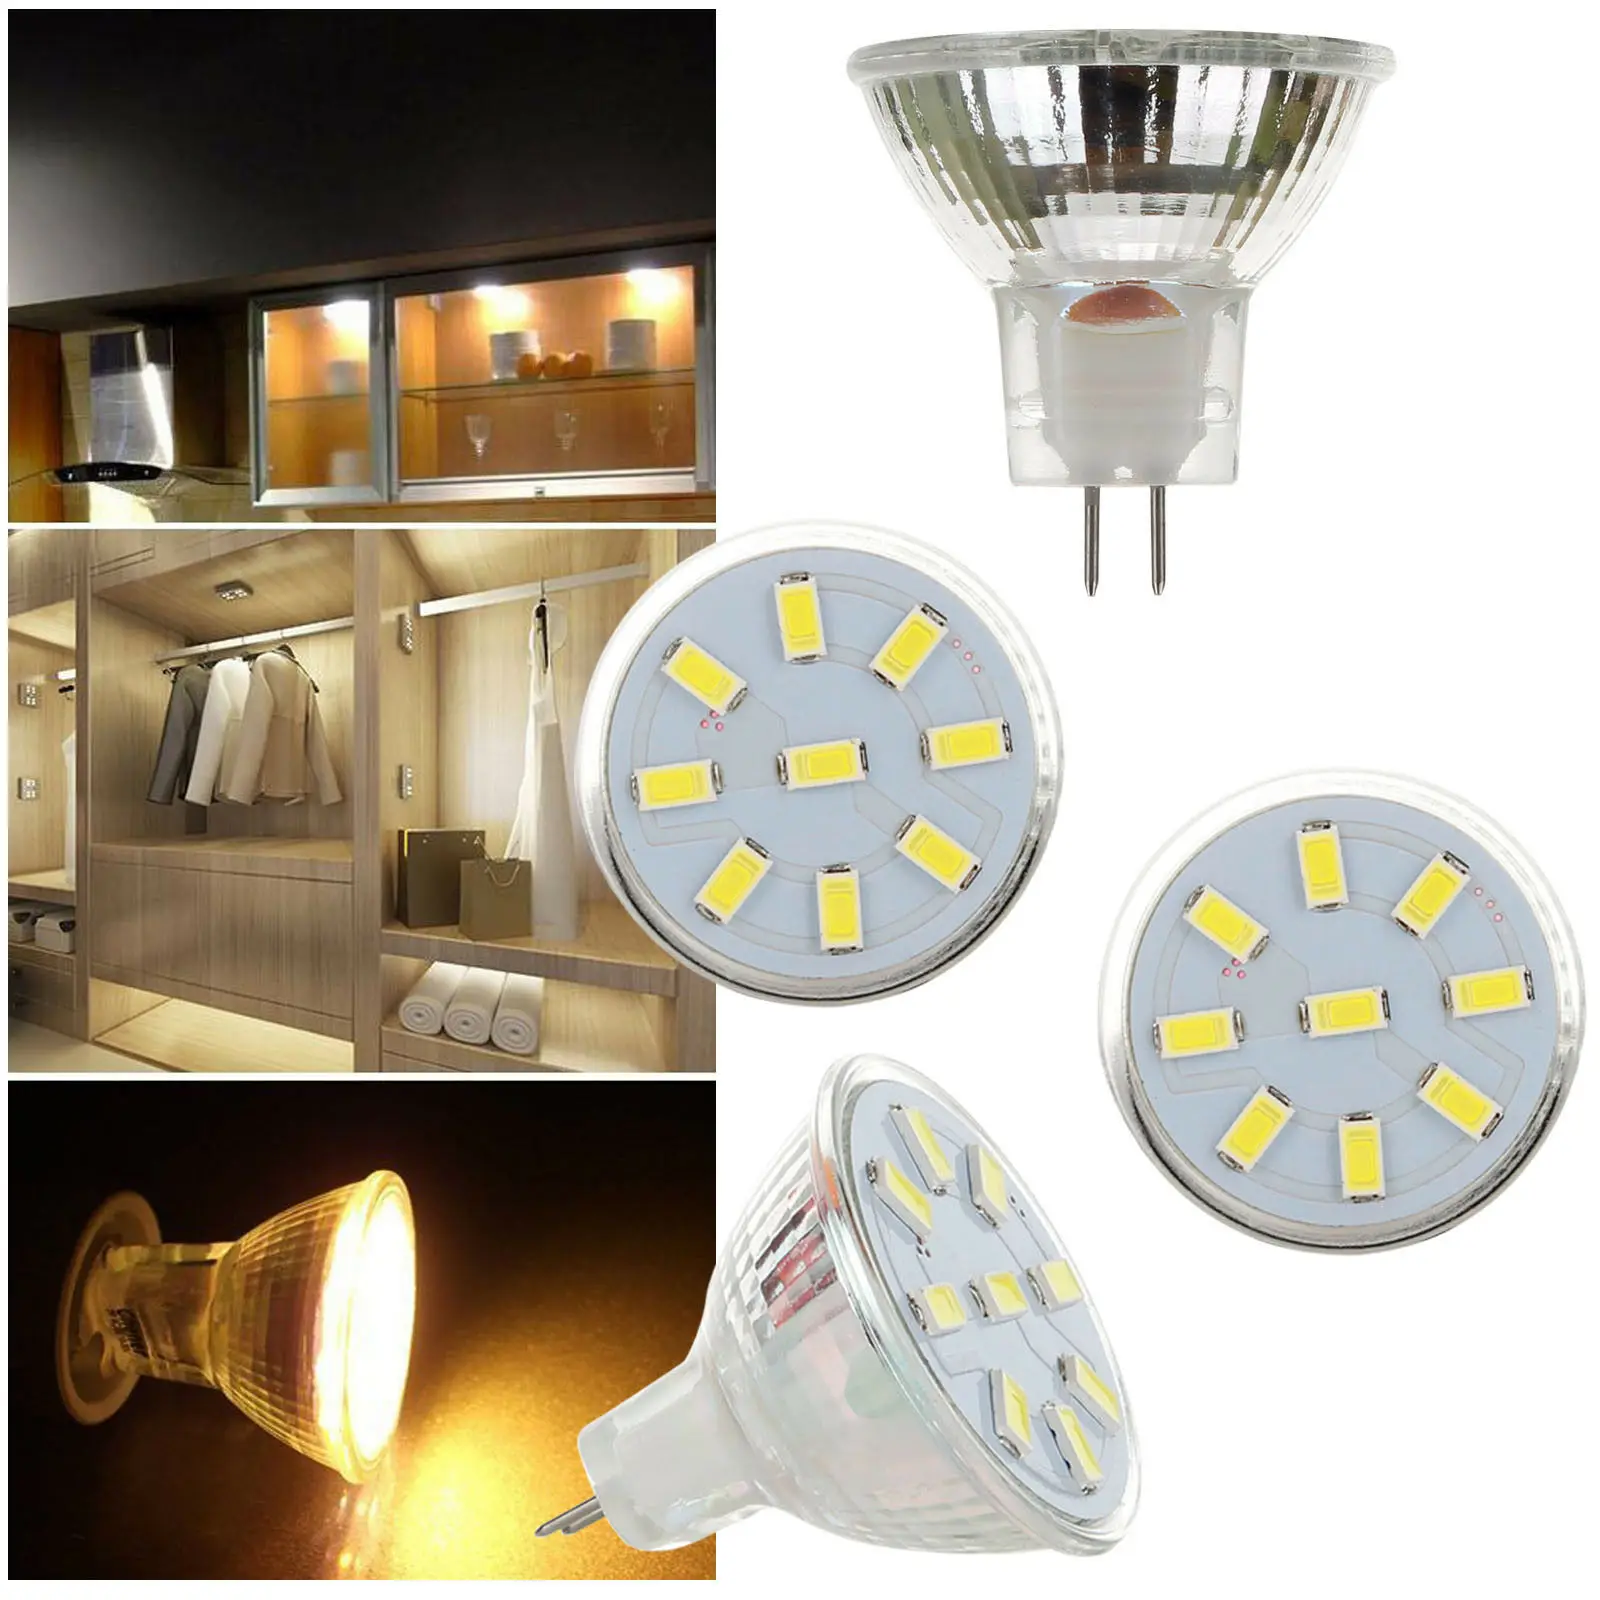 

MR11 LED Bulb Spotlight 2W 3W 4W 12-24V 5733 2835 SMD 10W 20W Equivalent Lamp Lampada 35mm Led Spot Light Home Lighting Lamps